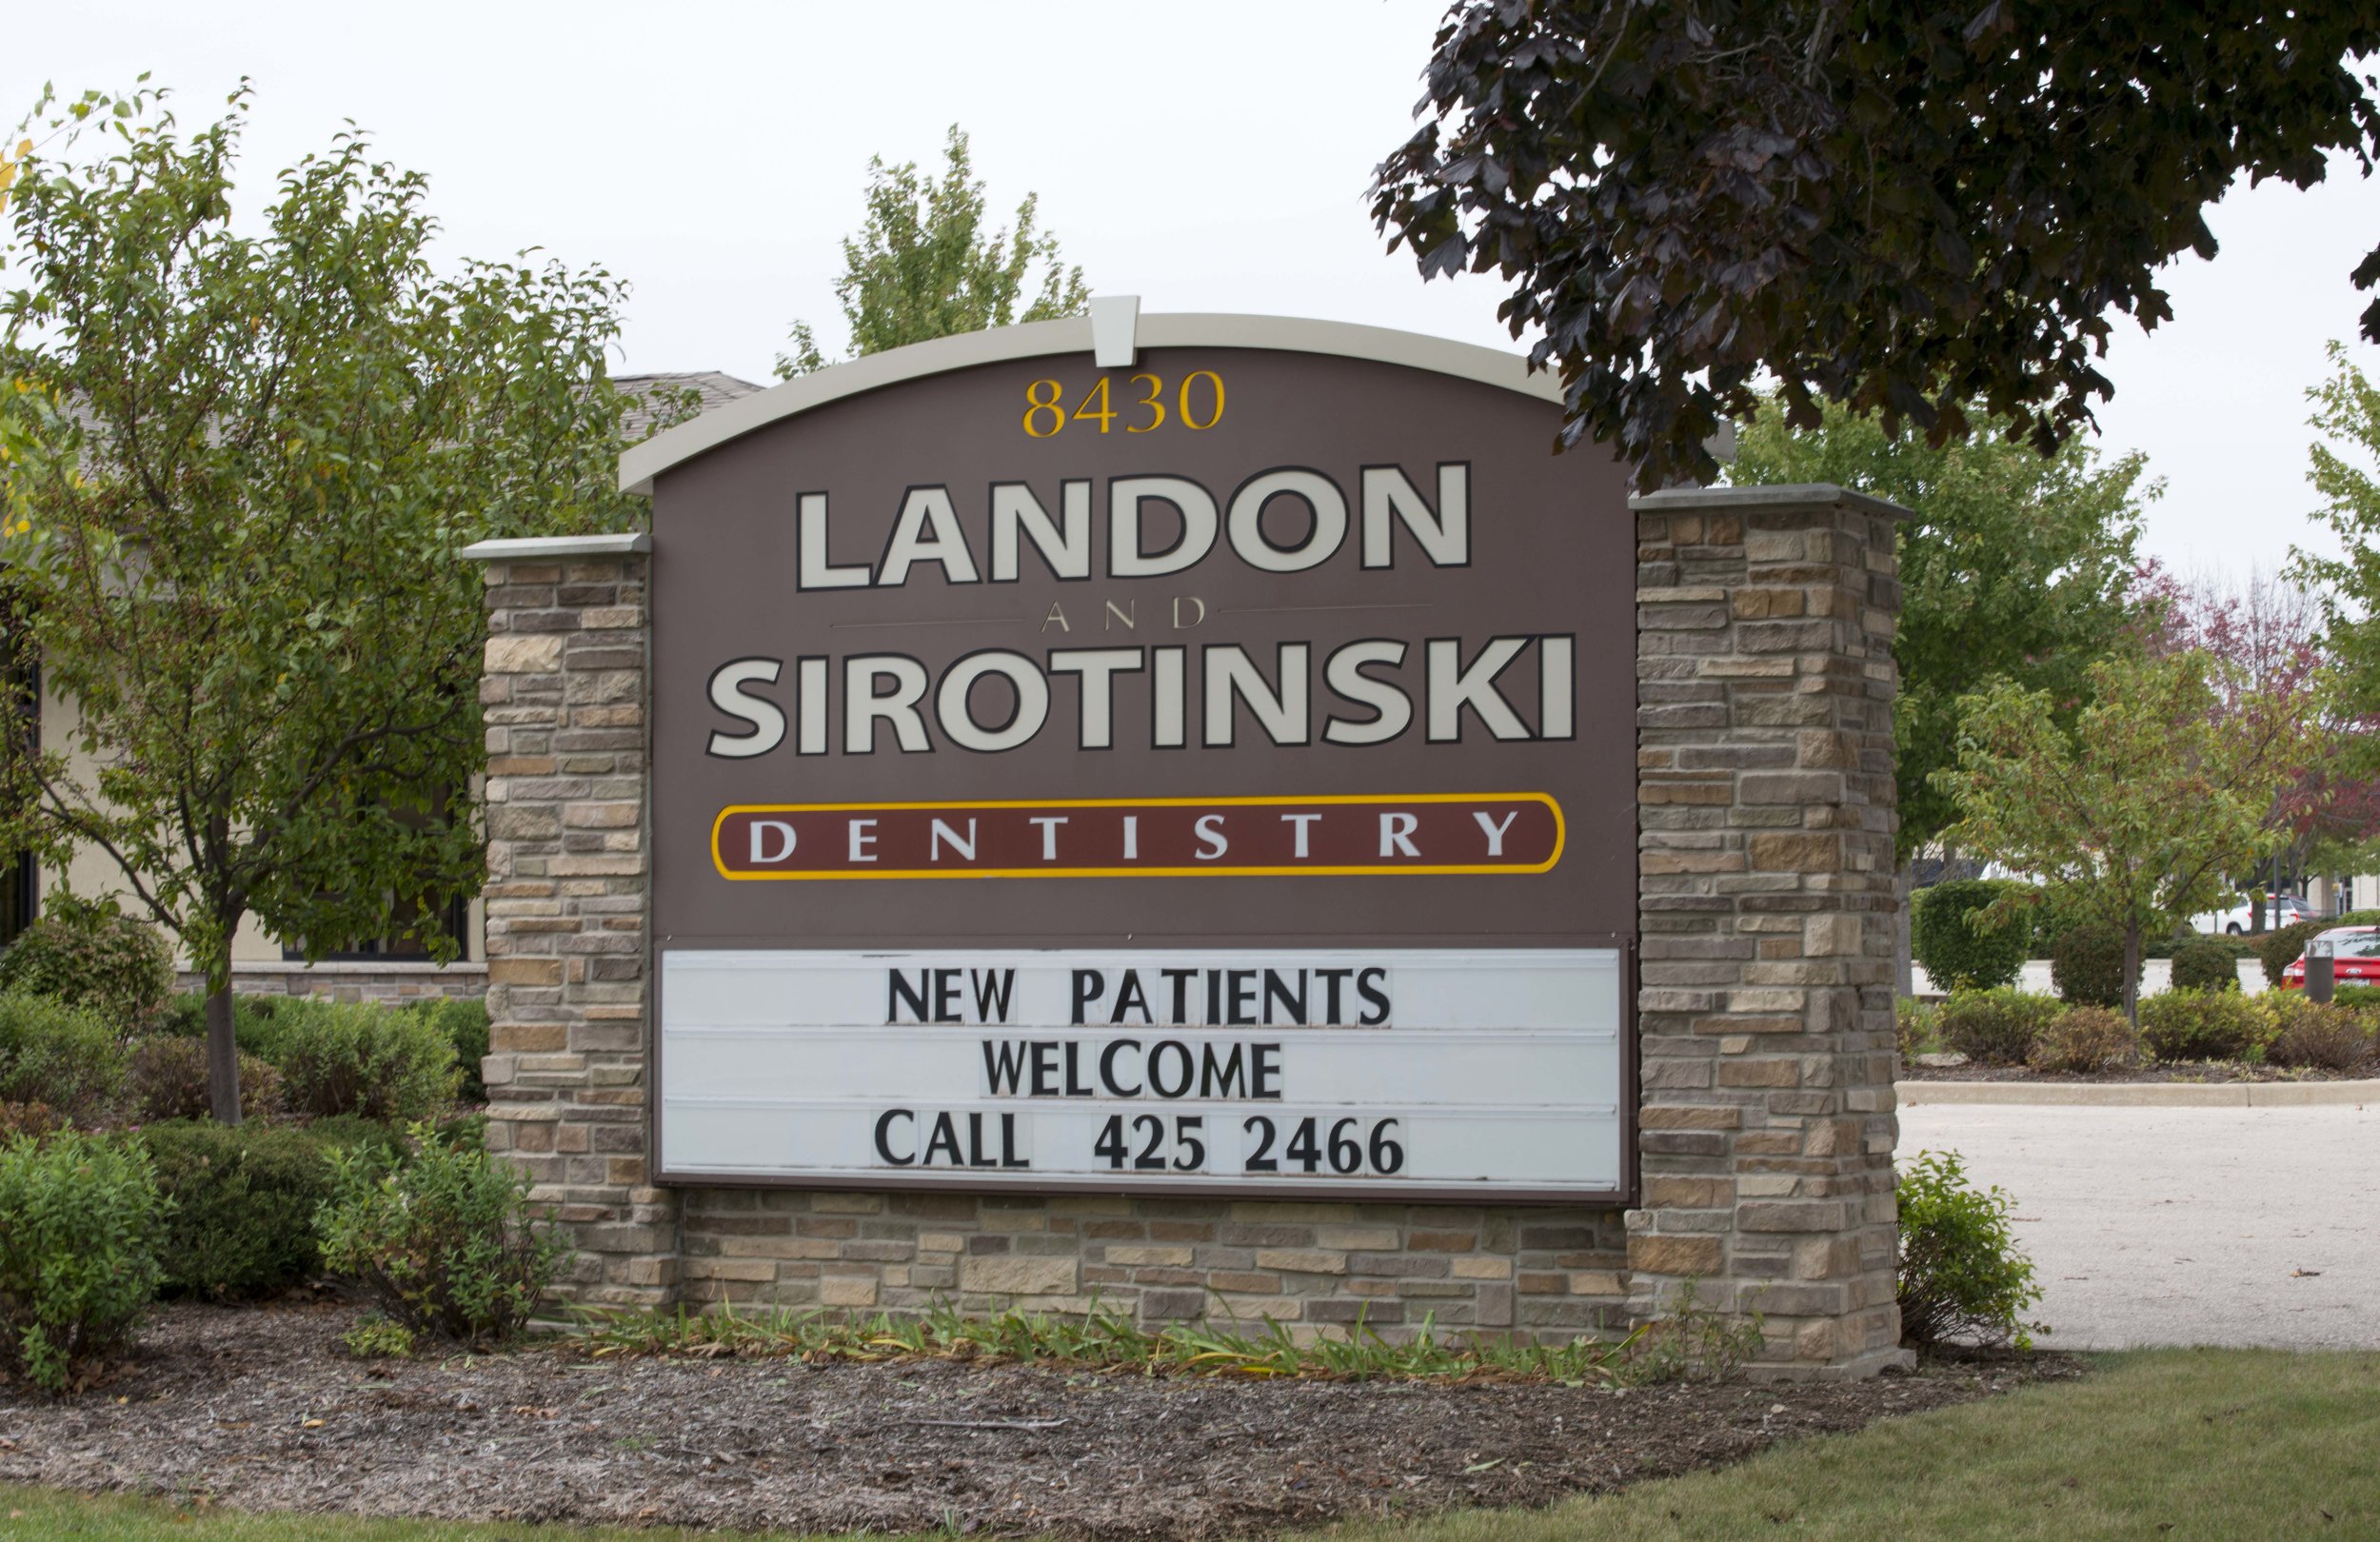 Landon & Sirontinski Dentistry